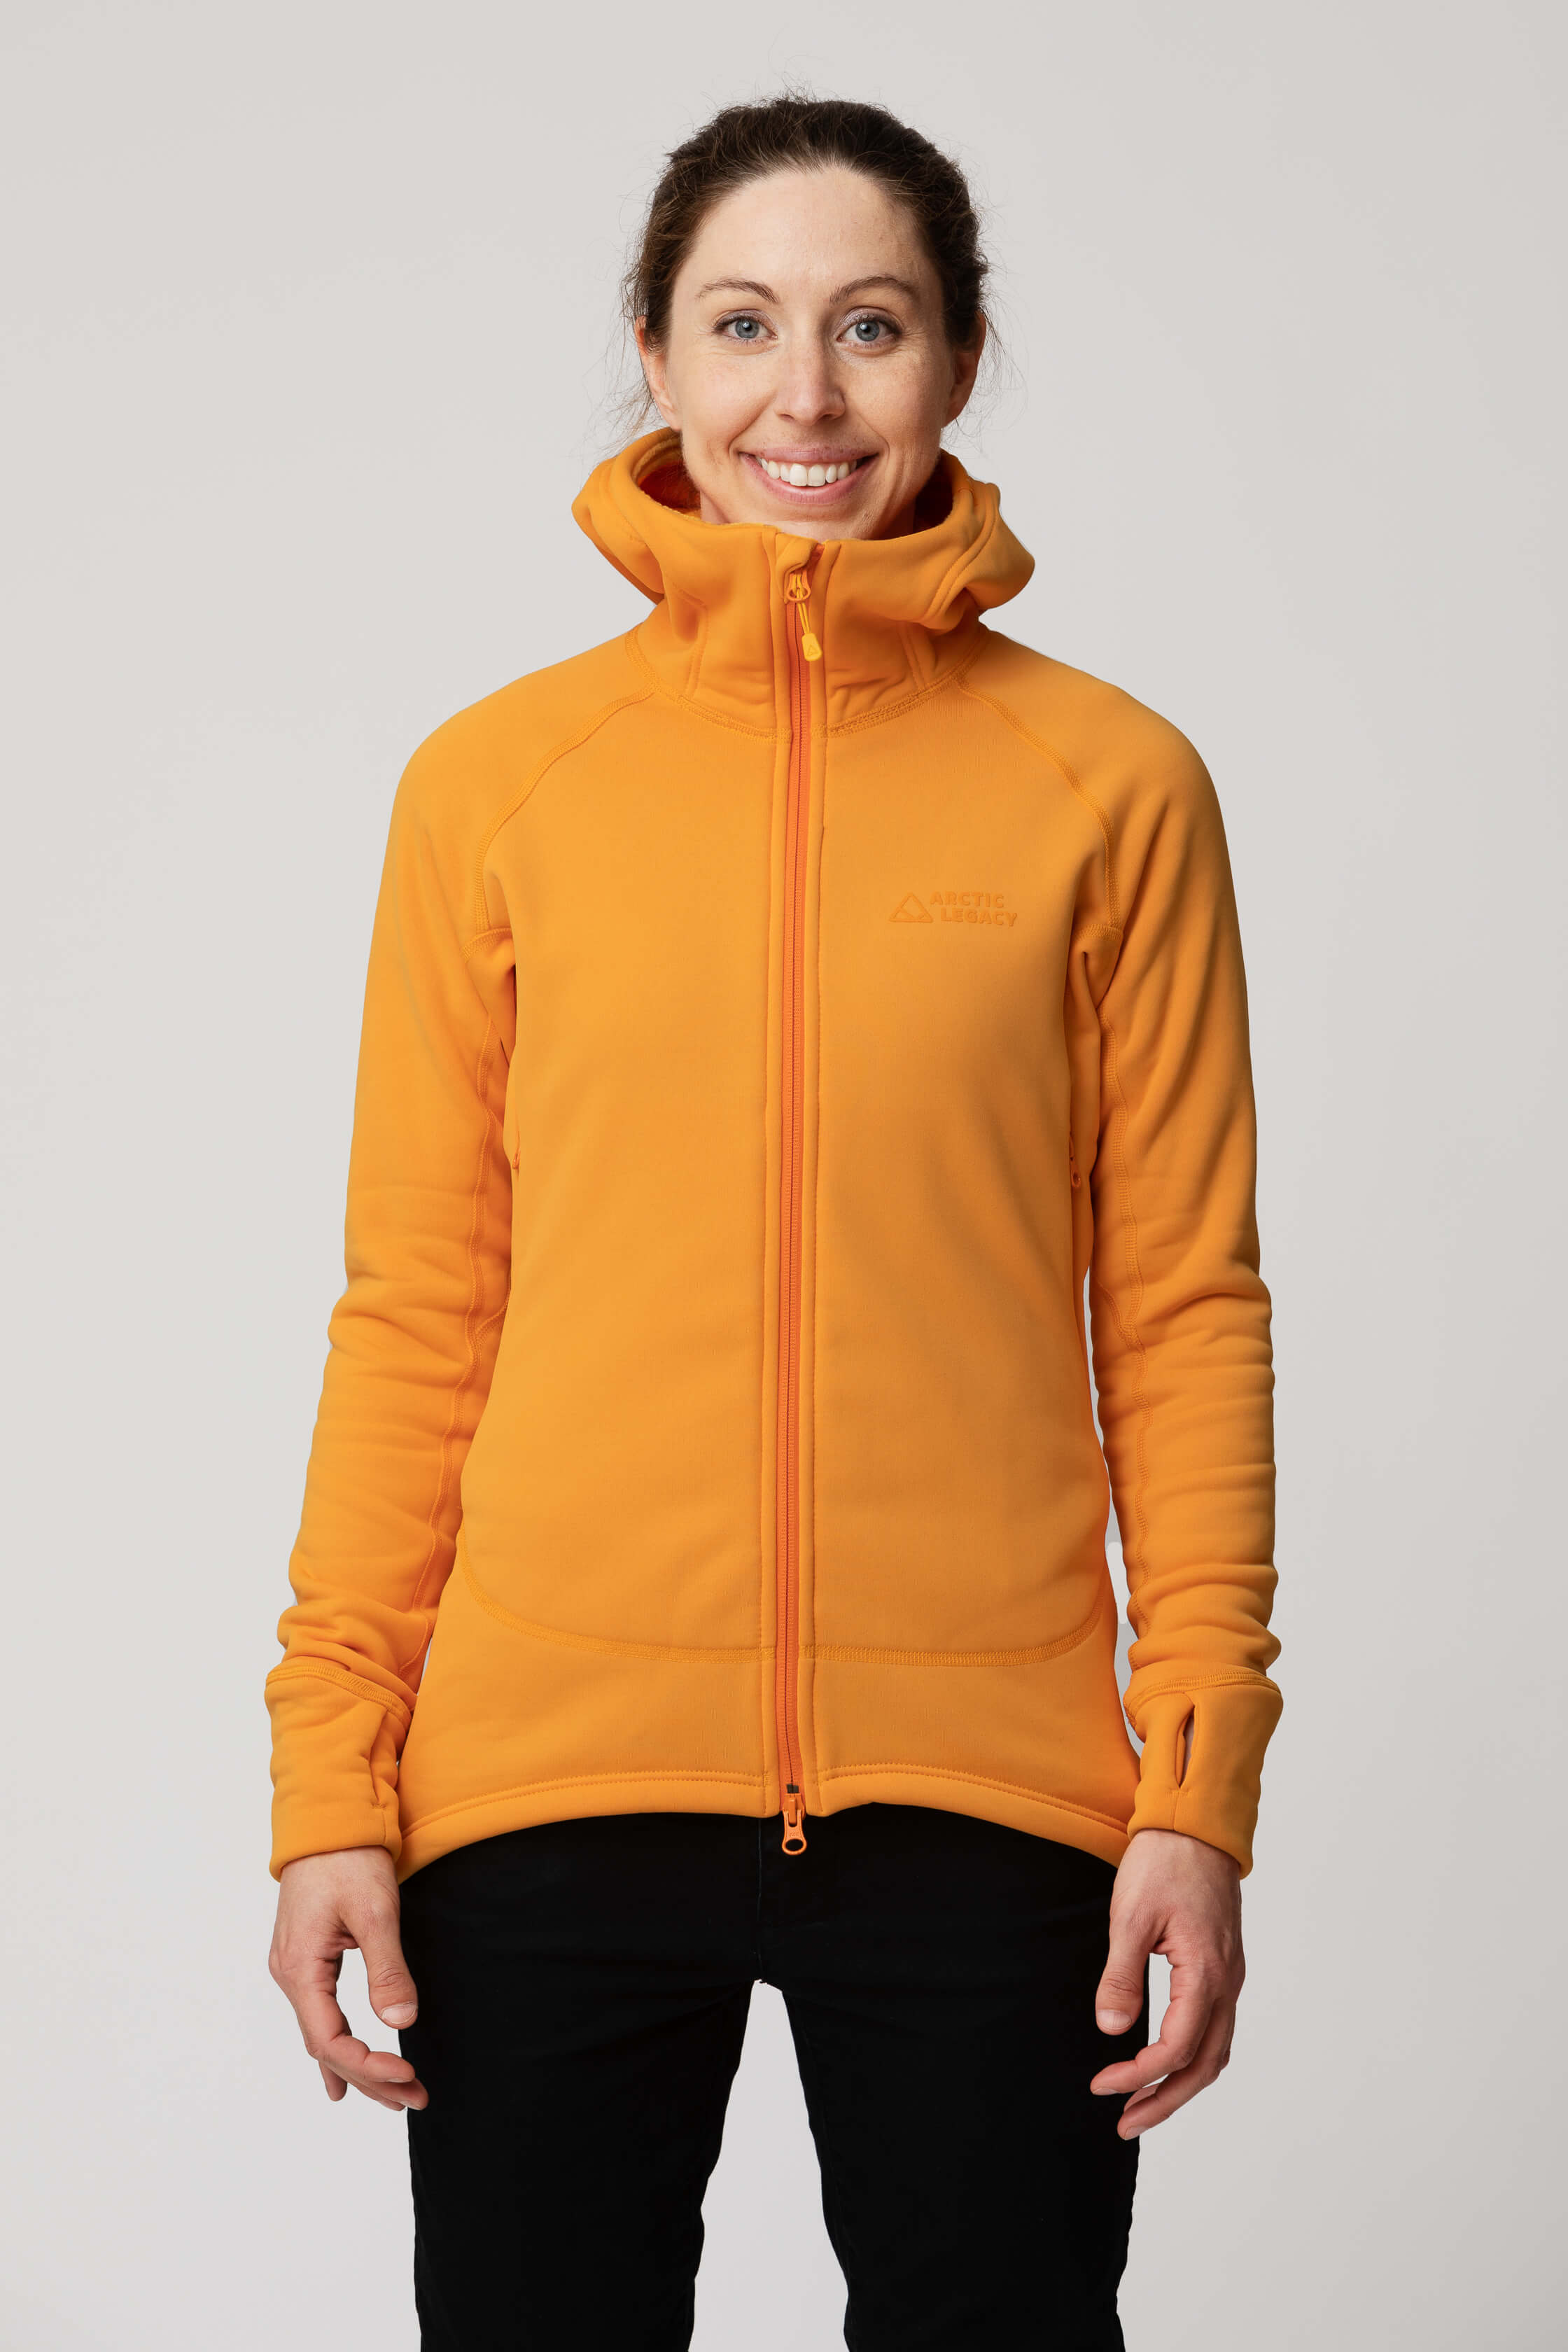 Women's orange yellow fleece jacket - front view of the Arctic Legacy Nanuk Pro Fleece Hoodie#color_zinnia